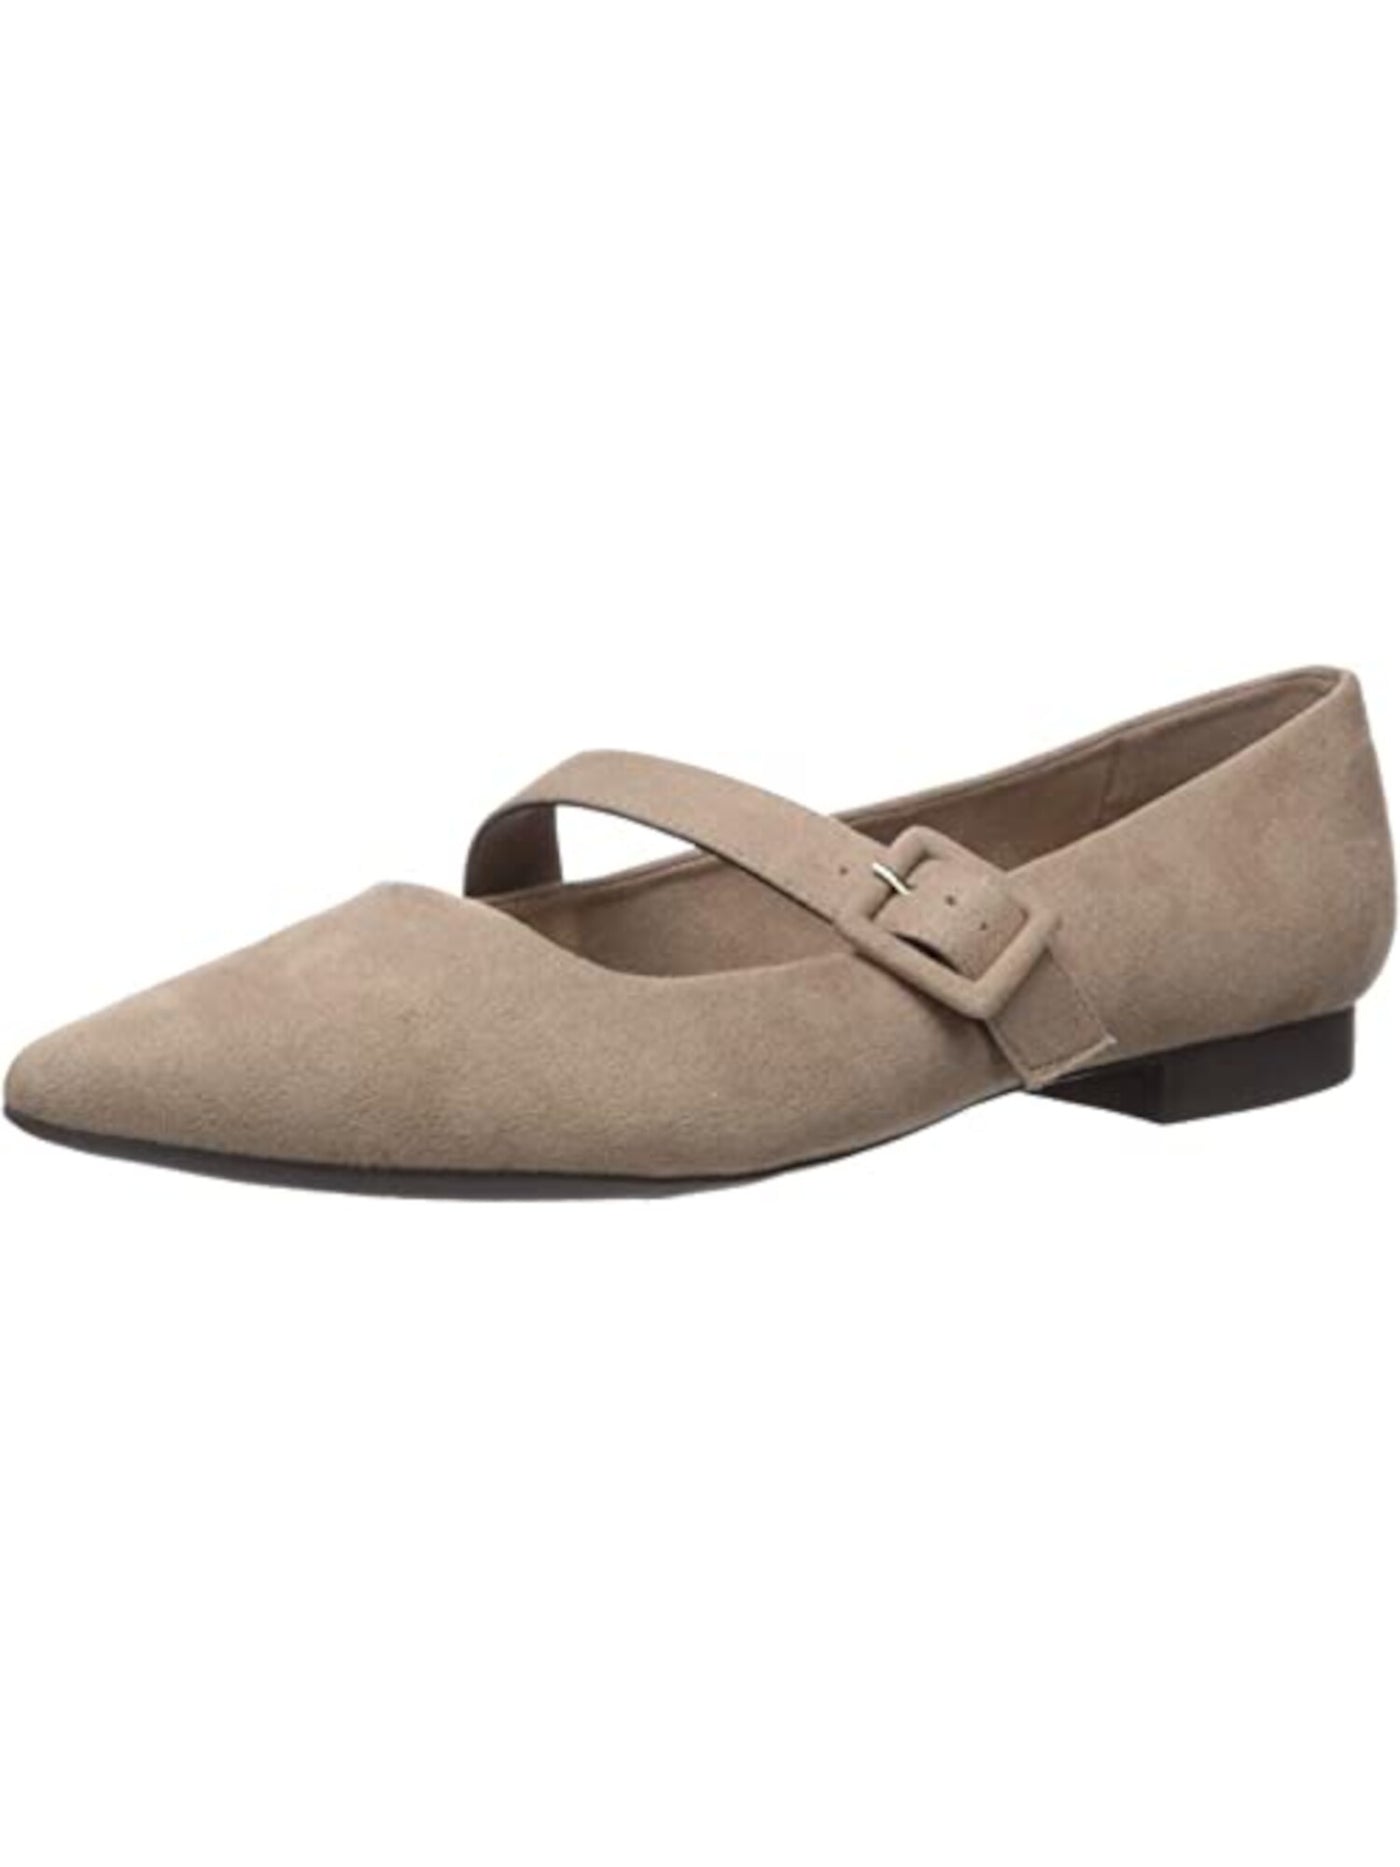 BELLA VITA Womens Beige Mary Jane Padded Asymmetrical Virginia Pointed Toe Block Heel Buckle Flats Shoes 11 W